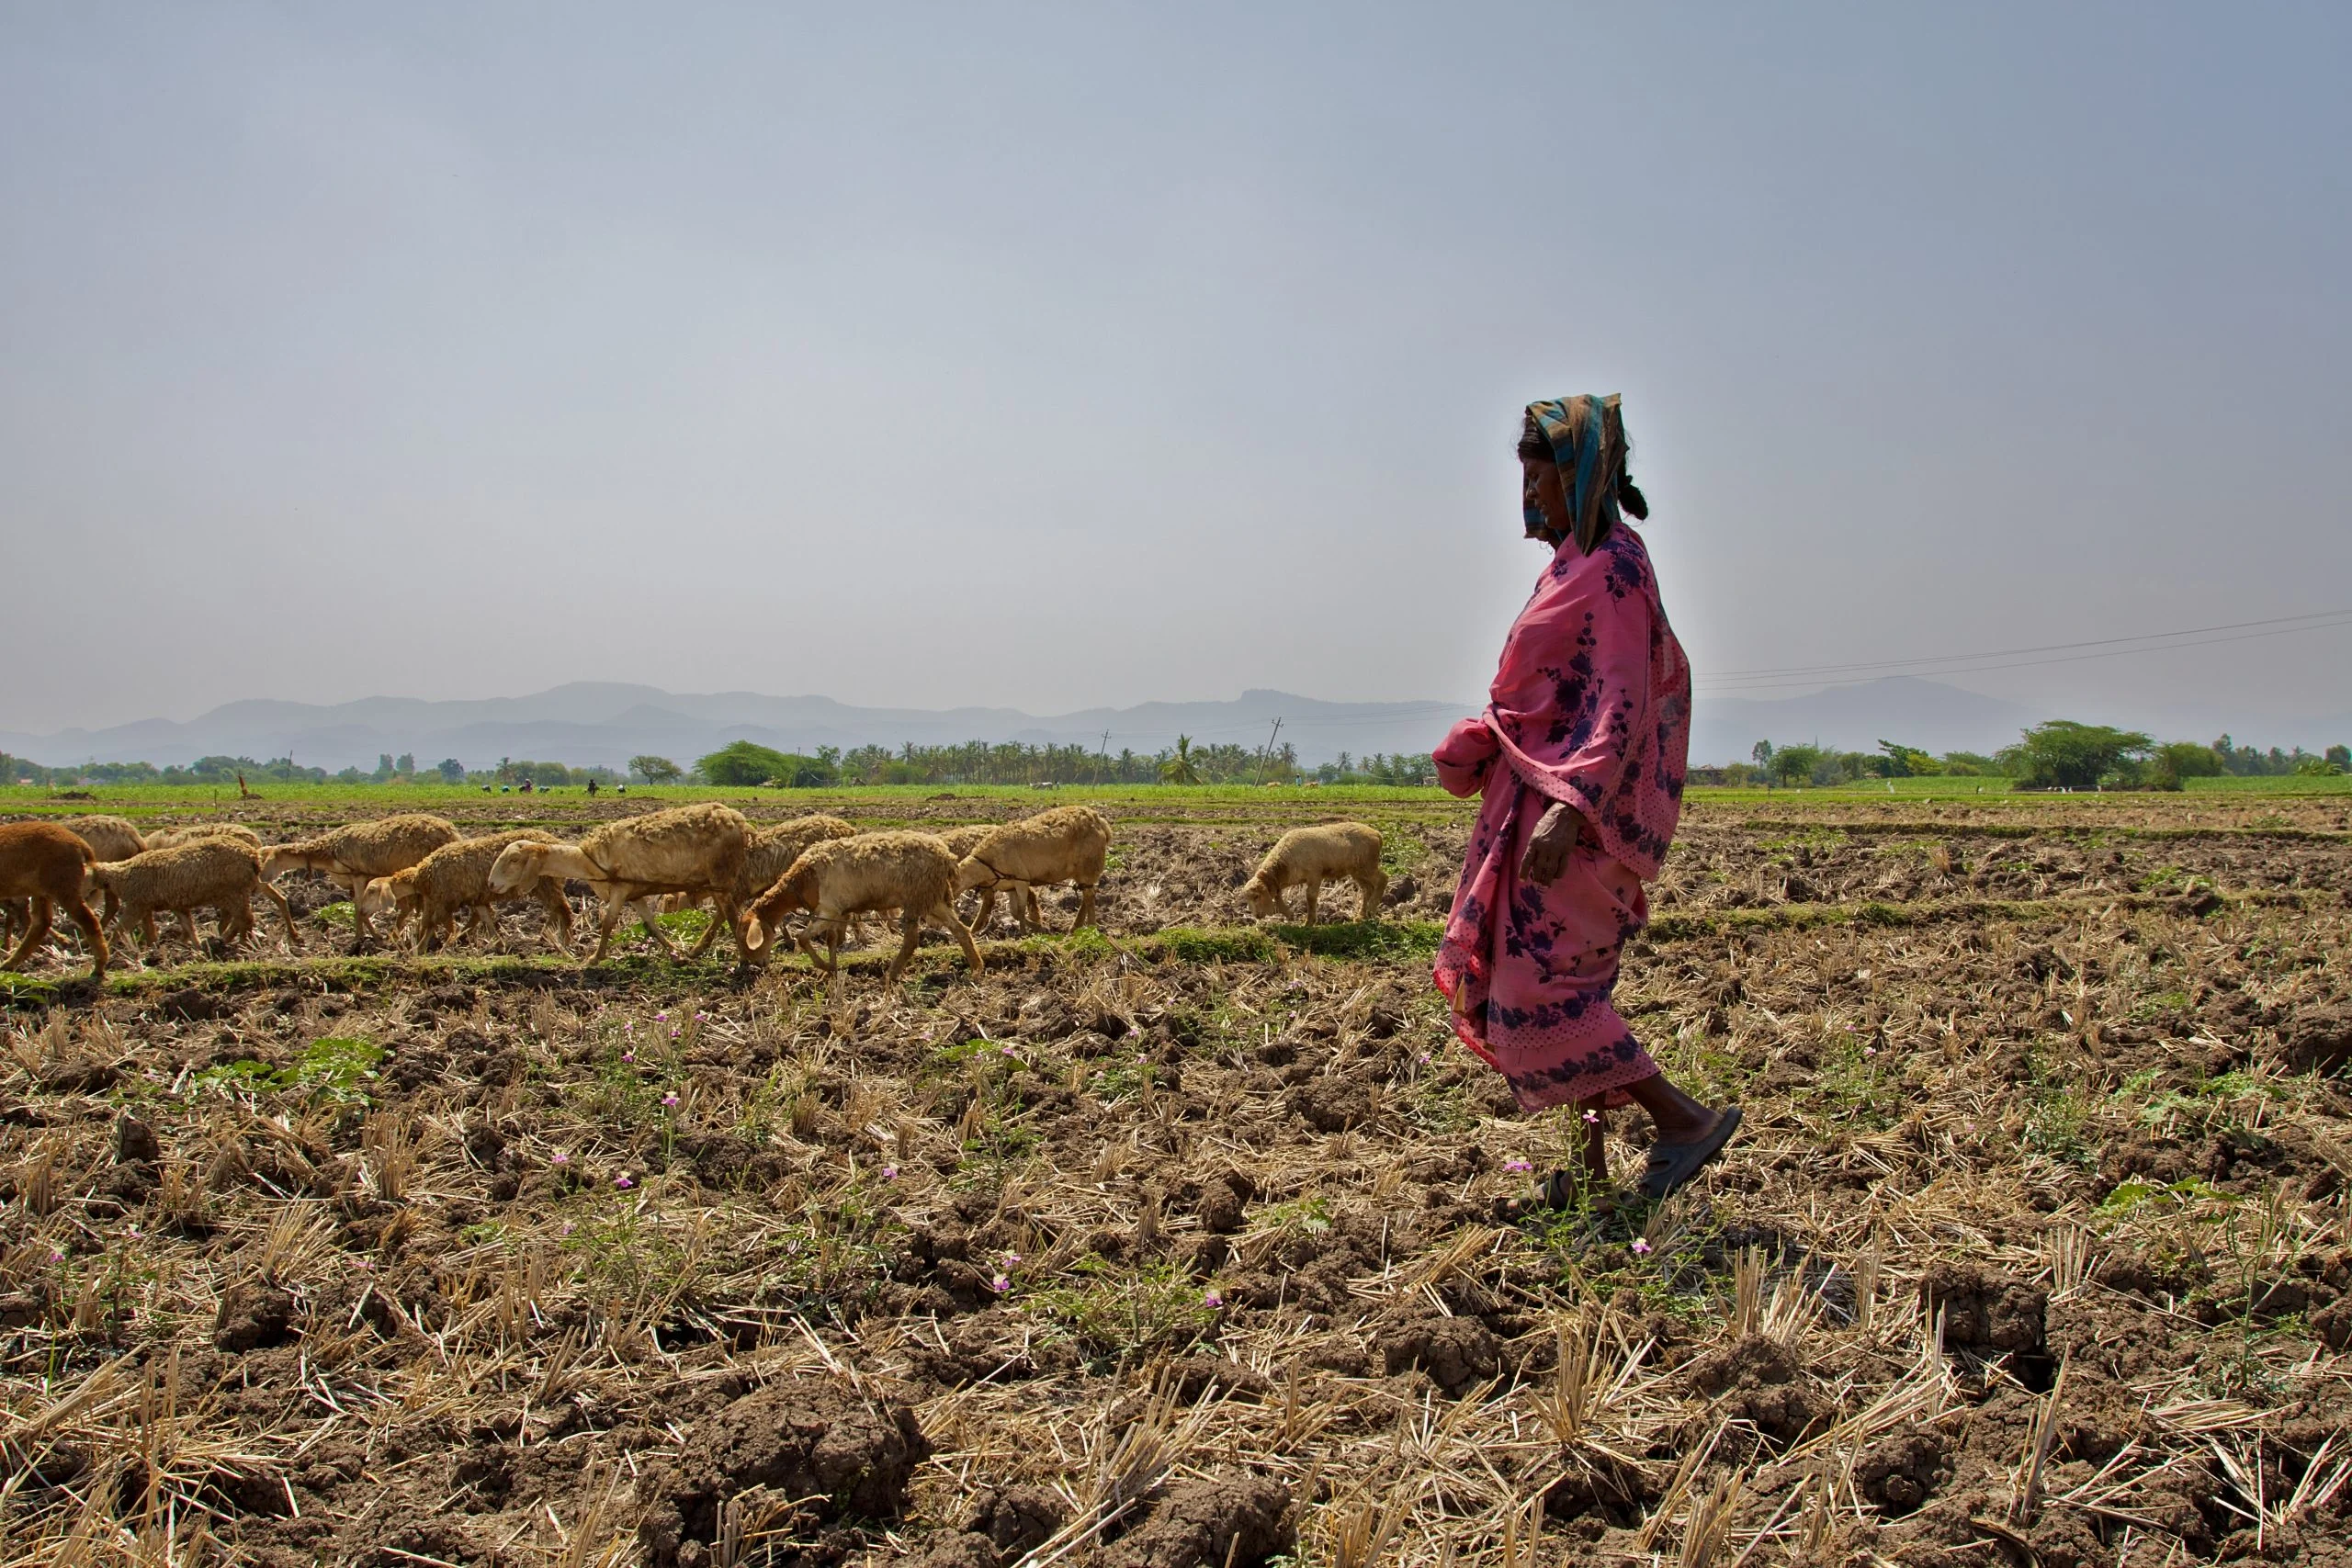 women farmers walking on a field-Picture courtesy: Arjun Swaminathan